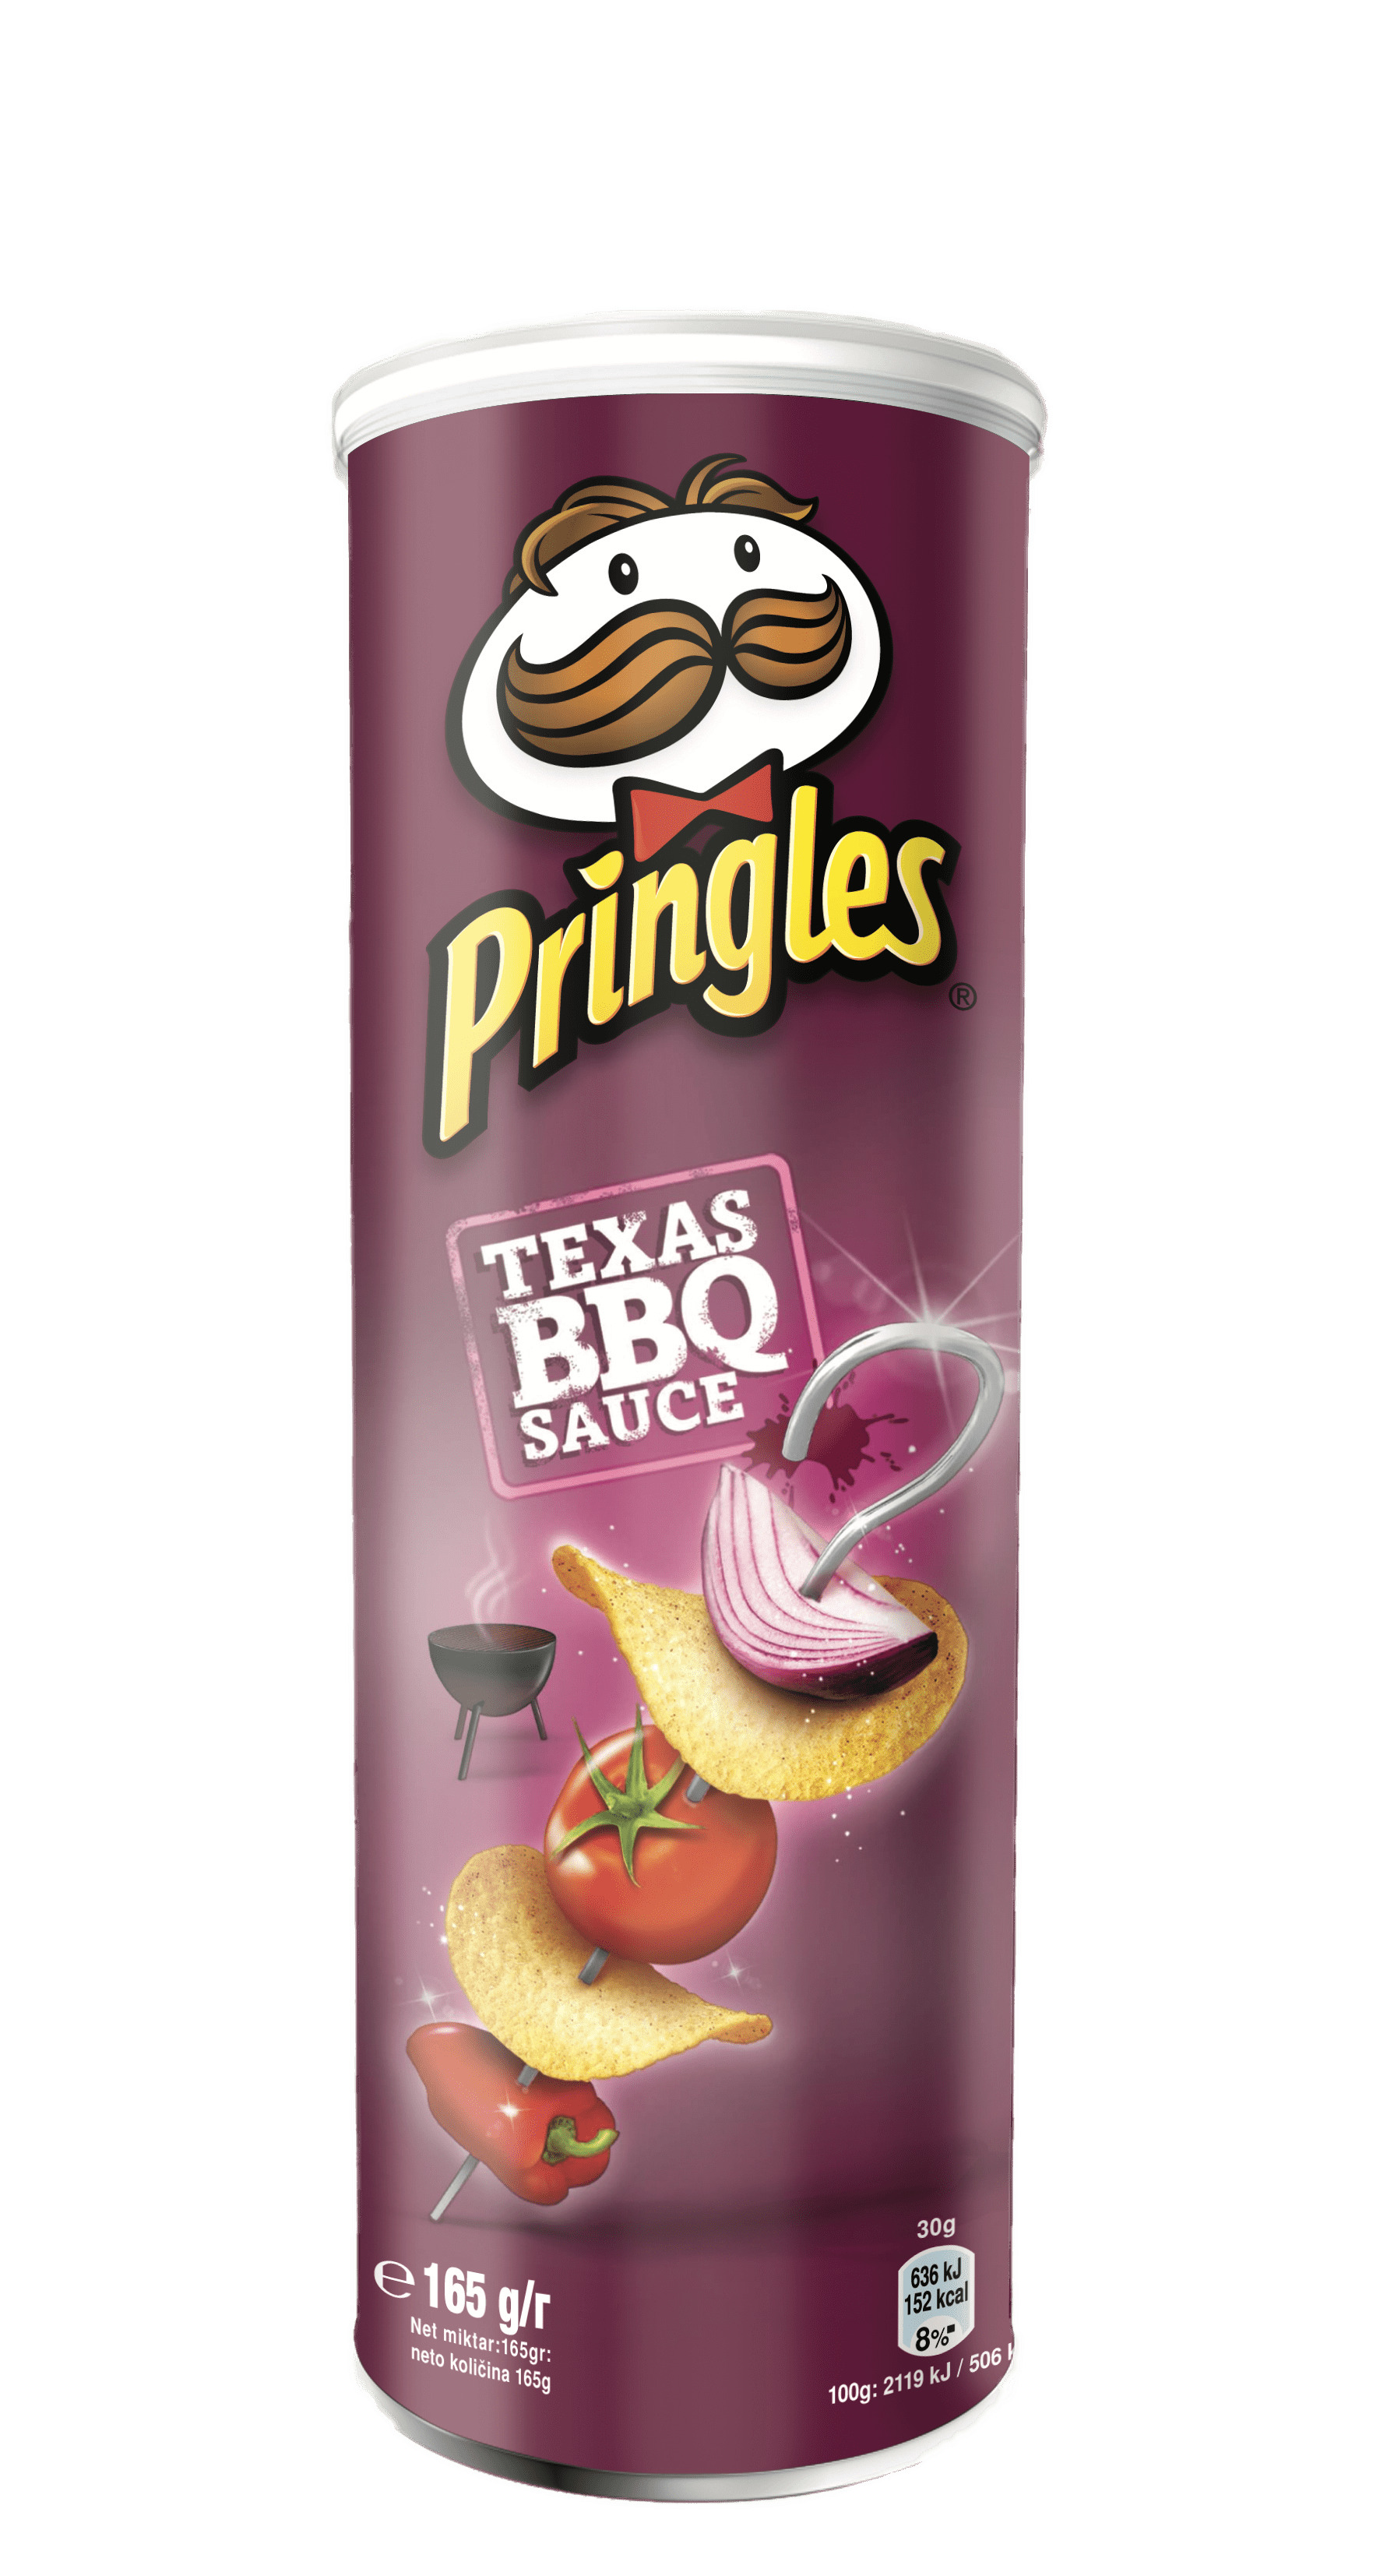 Pringles Texas BBQ Sauce png icons